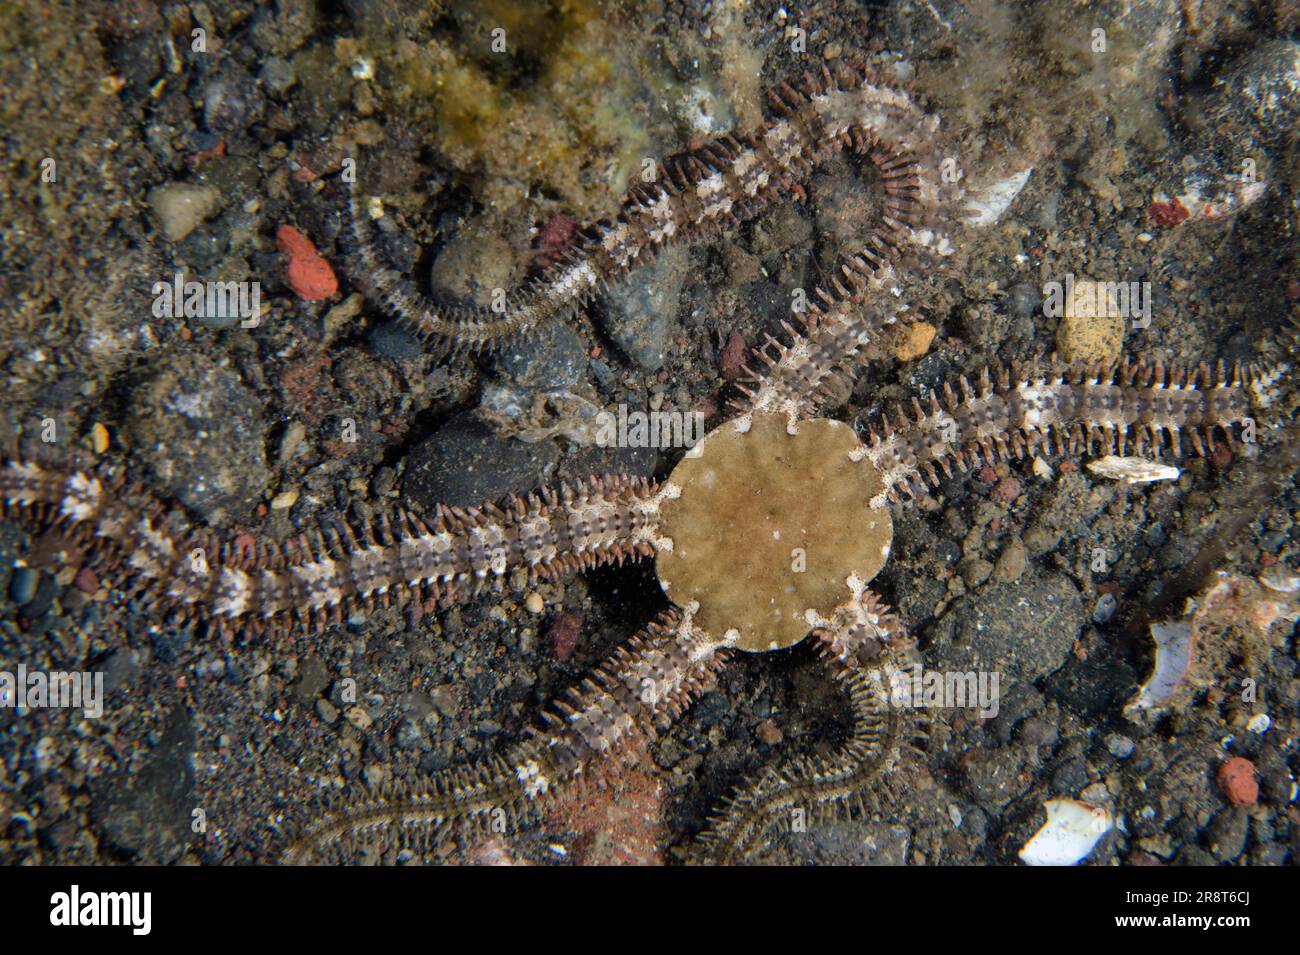 Brittle Star, Ophiocomidae Family, Ghost Bay dive site, Amed, Karangasem Regency, Bali, Indonesia, Indian Ocean Stock Photo